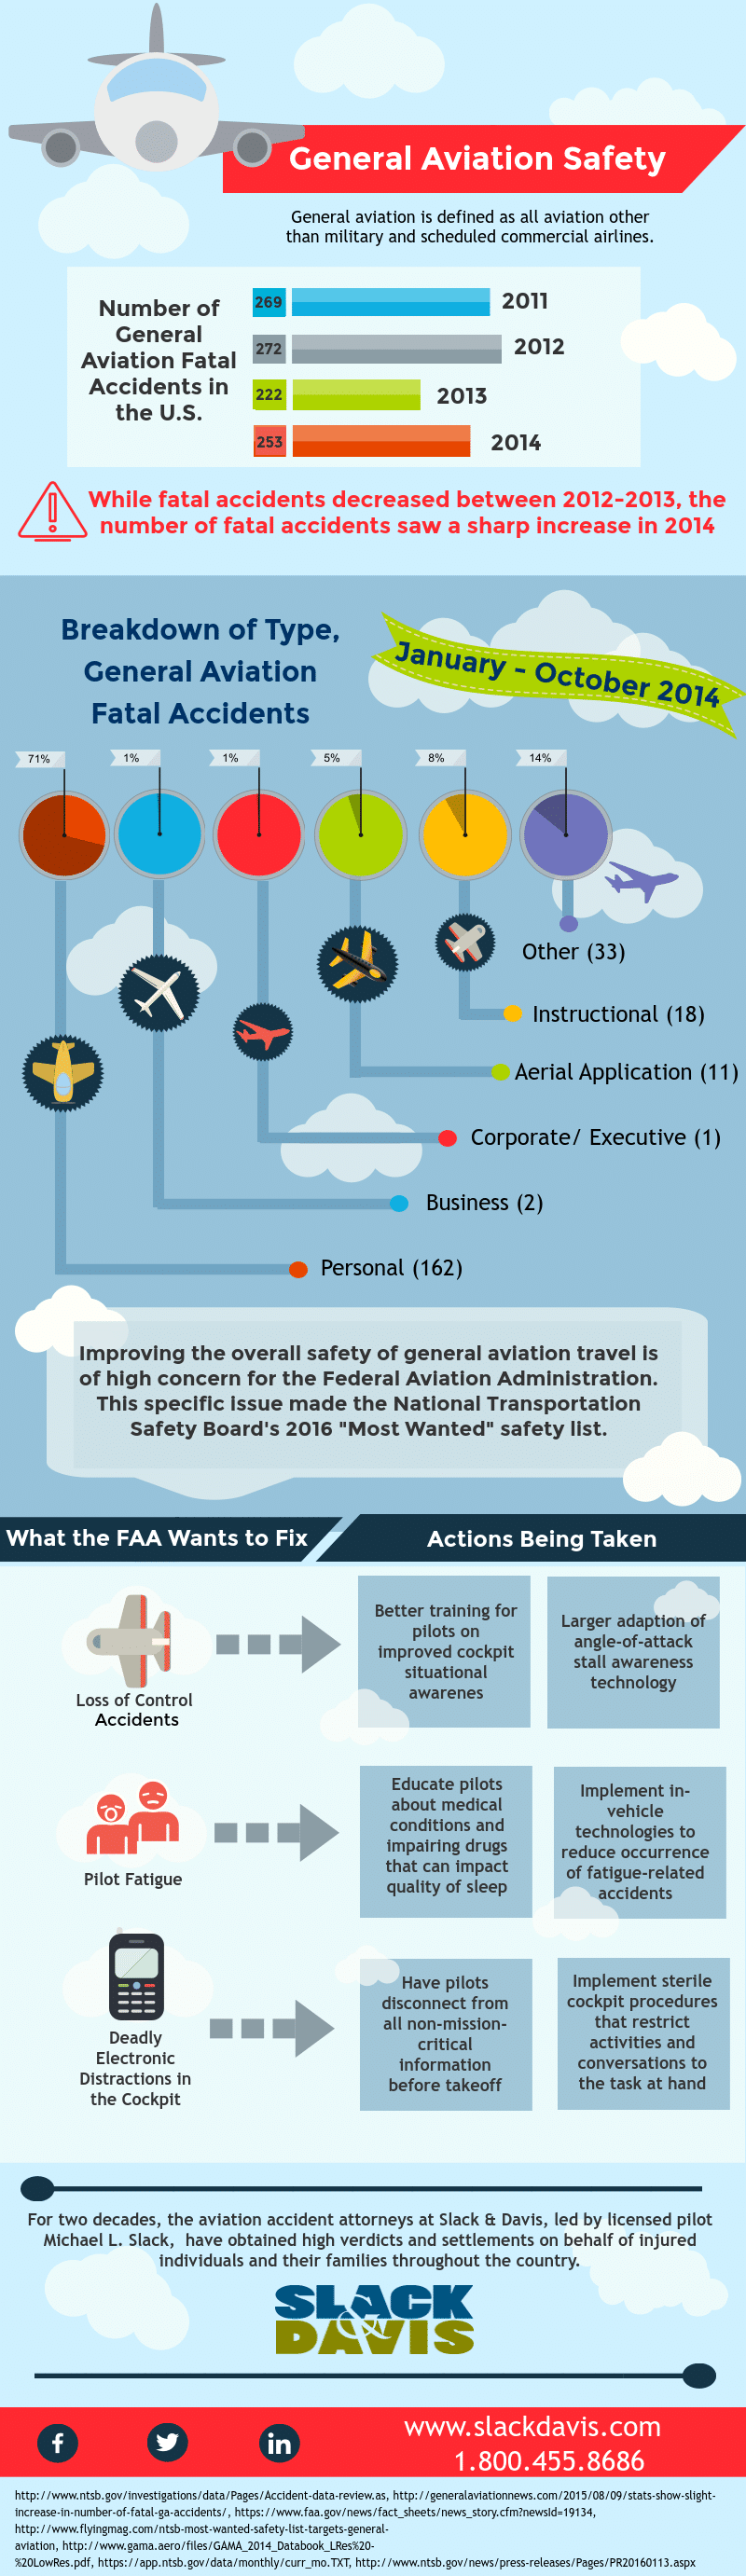 General Aviation Information